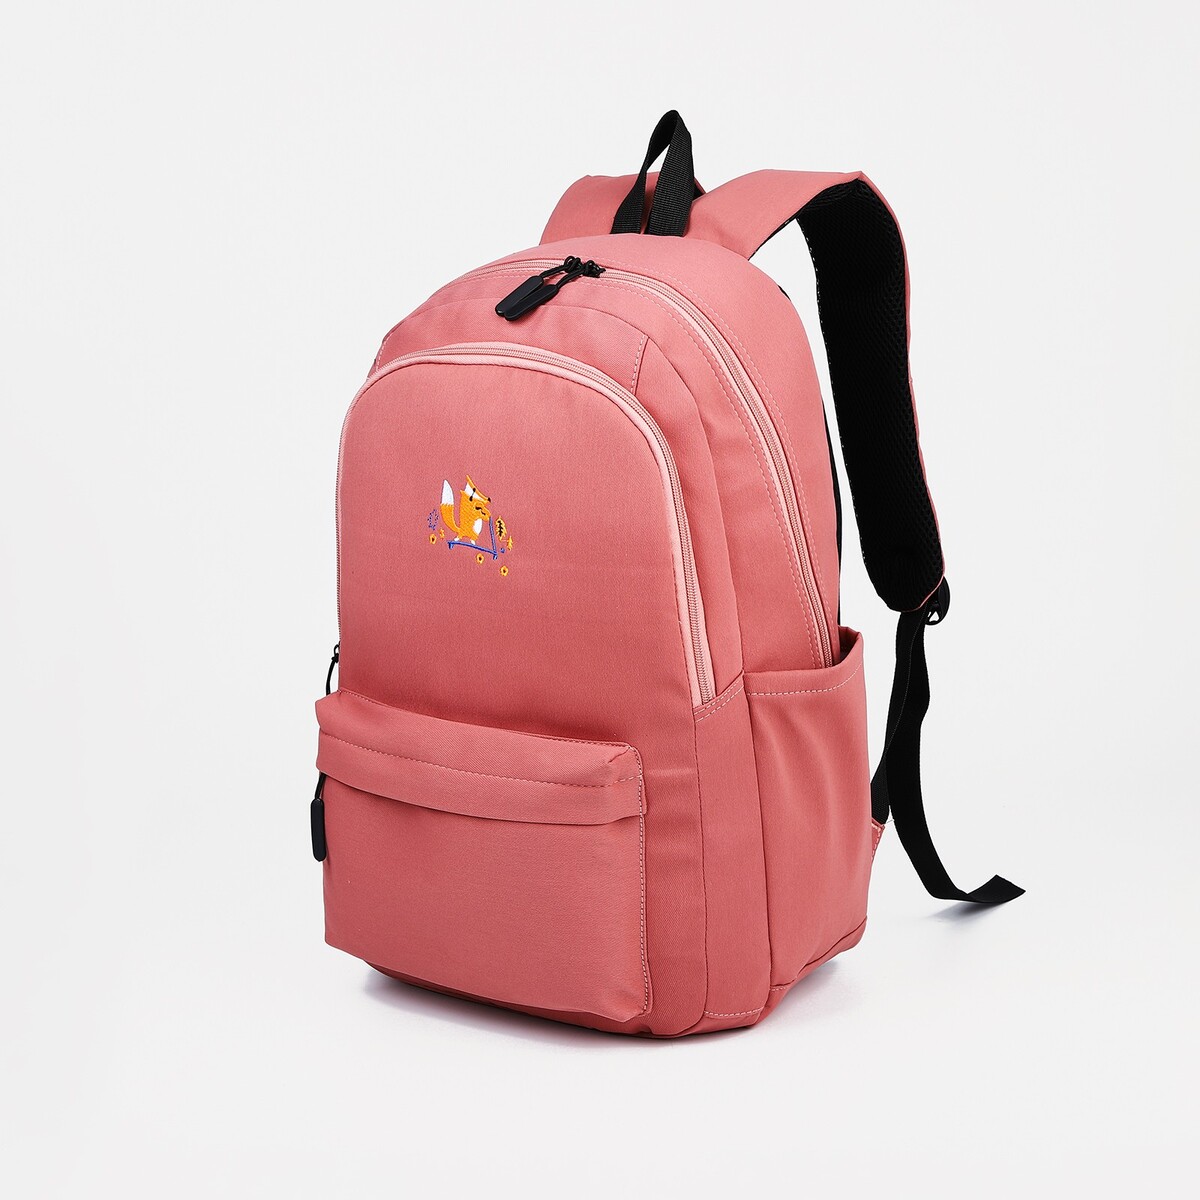 Рюкзак молодежный из текстиля, 2 отдела на молниях, 3 кармана, цвет розовый рюкзак молодежный из текстиля на молнии 2 кармана розовый